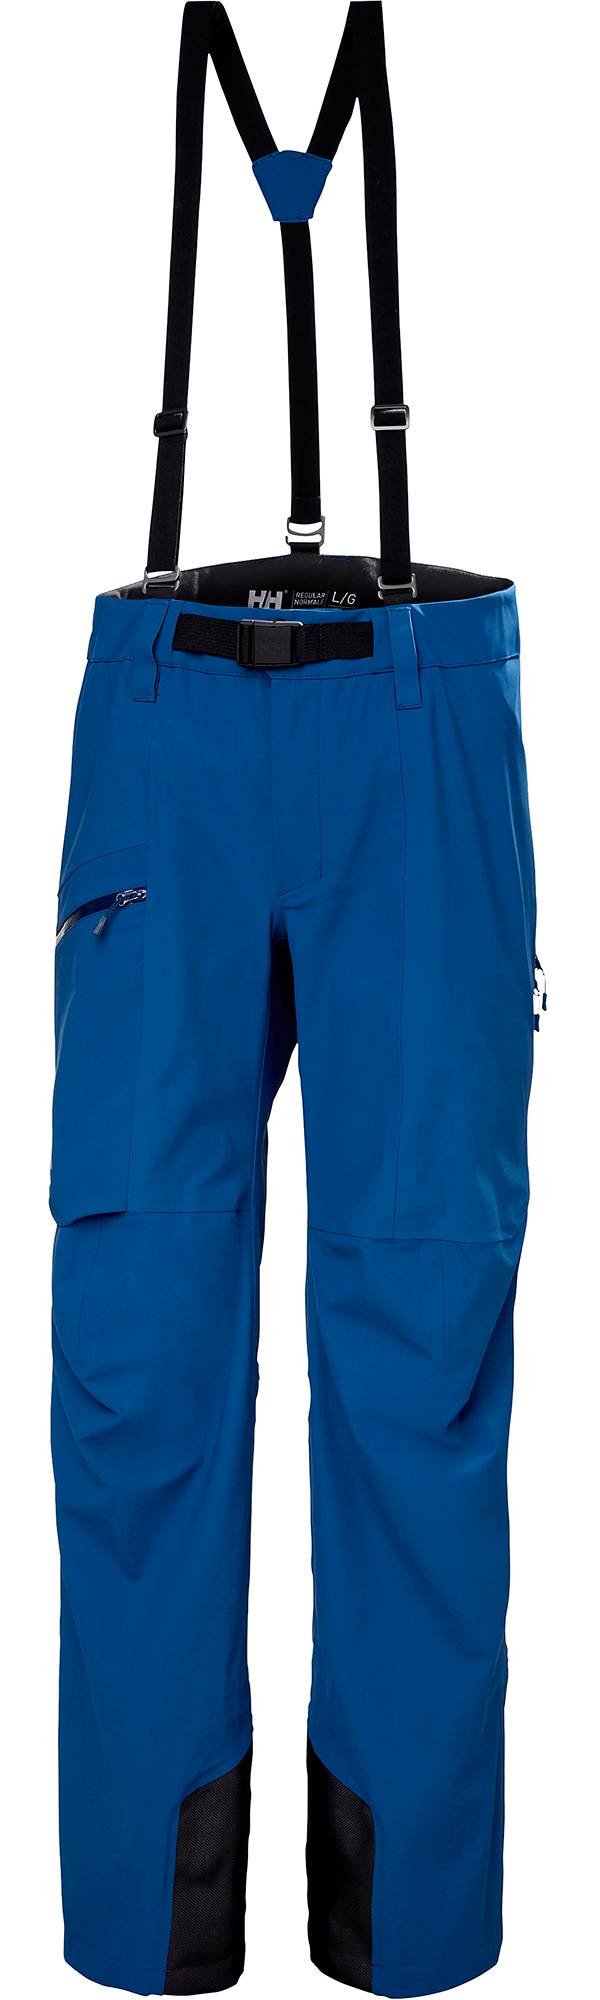 Helly Hansen Men's Verglas Backcountry Ski Shell Pants product image